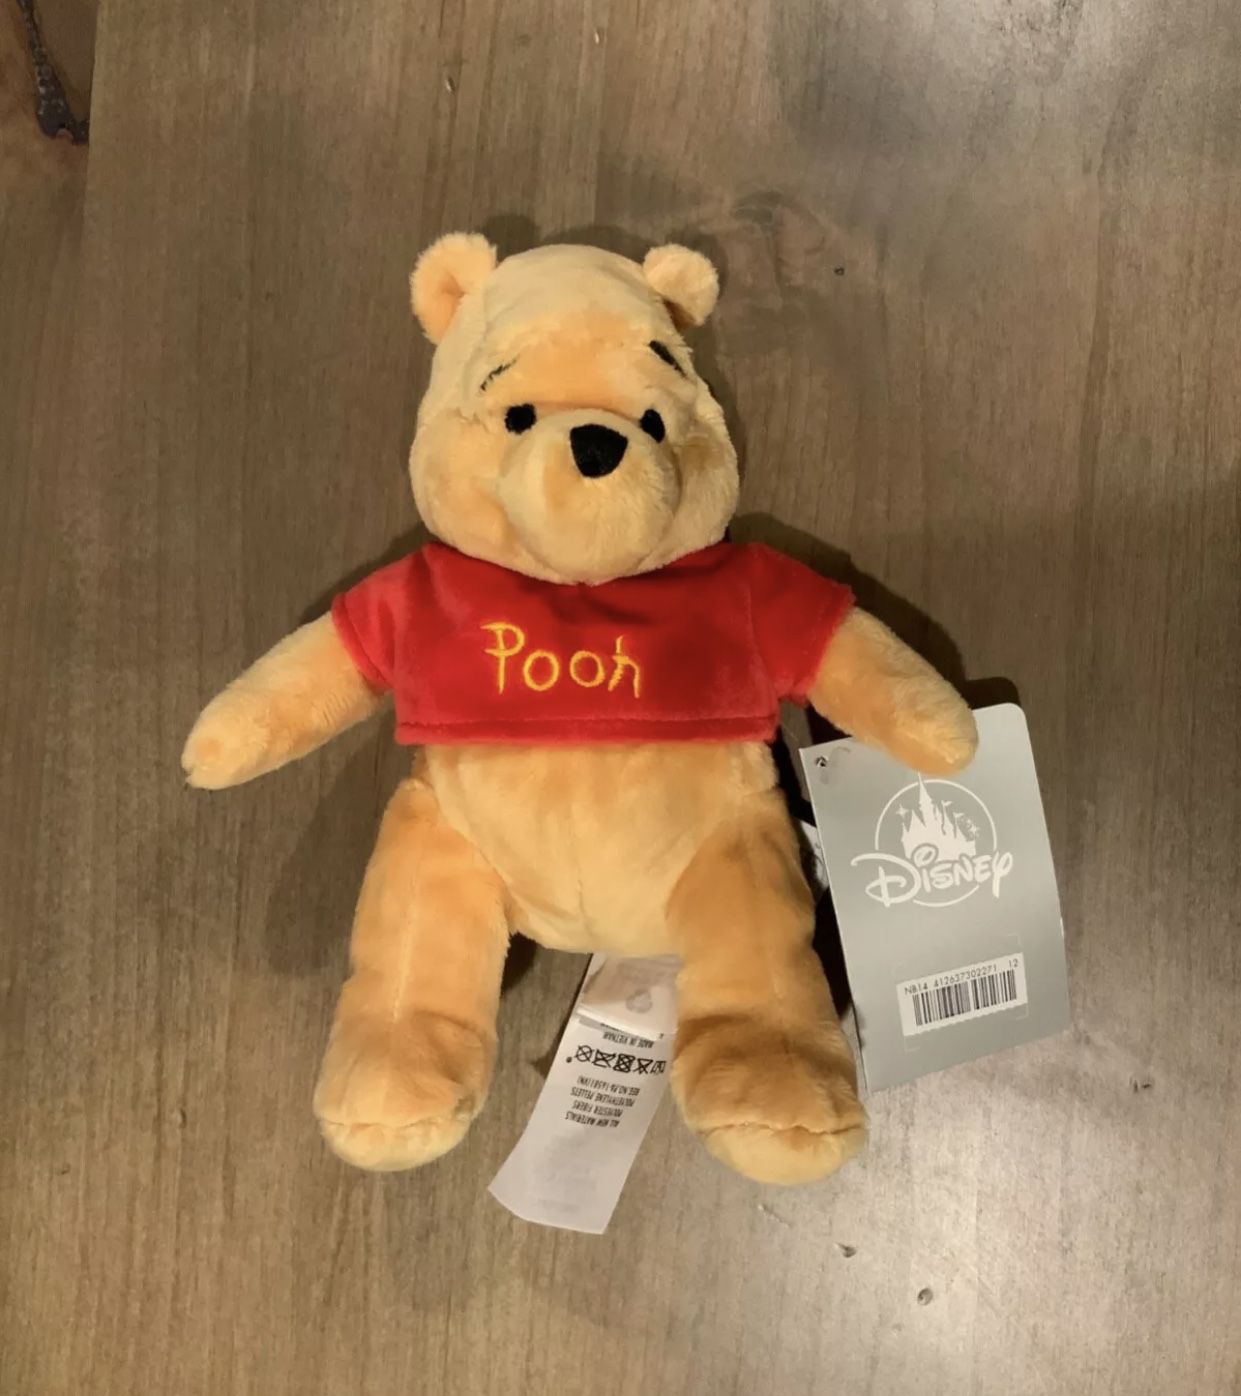 Disney Store Winnie The Pooh Plush Bean Bag Toy Doll Bear Stuffed Animal 8” Red